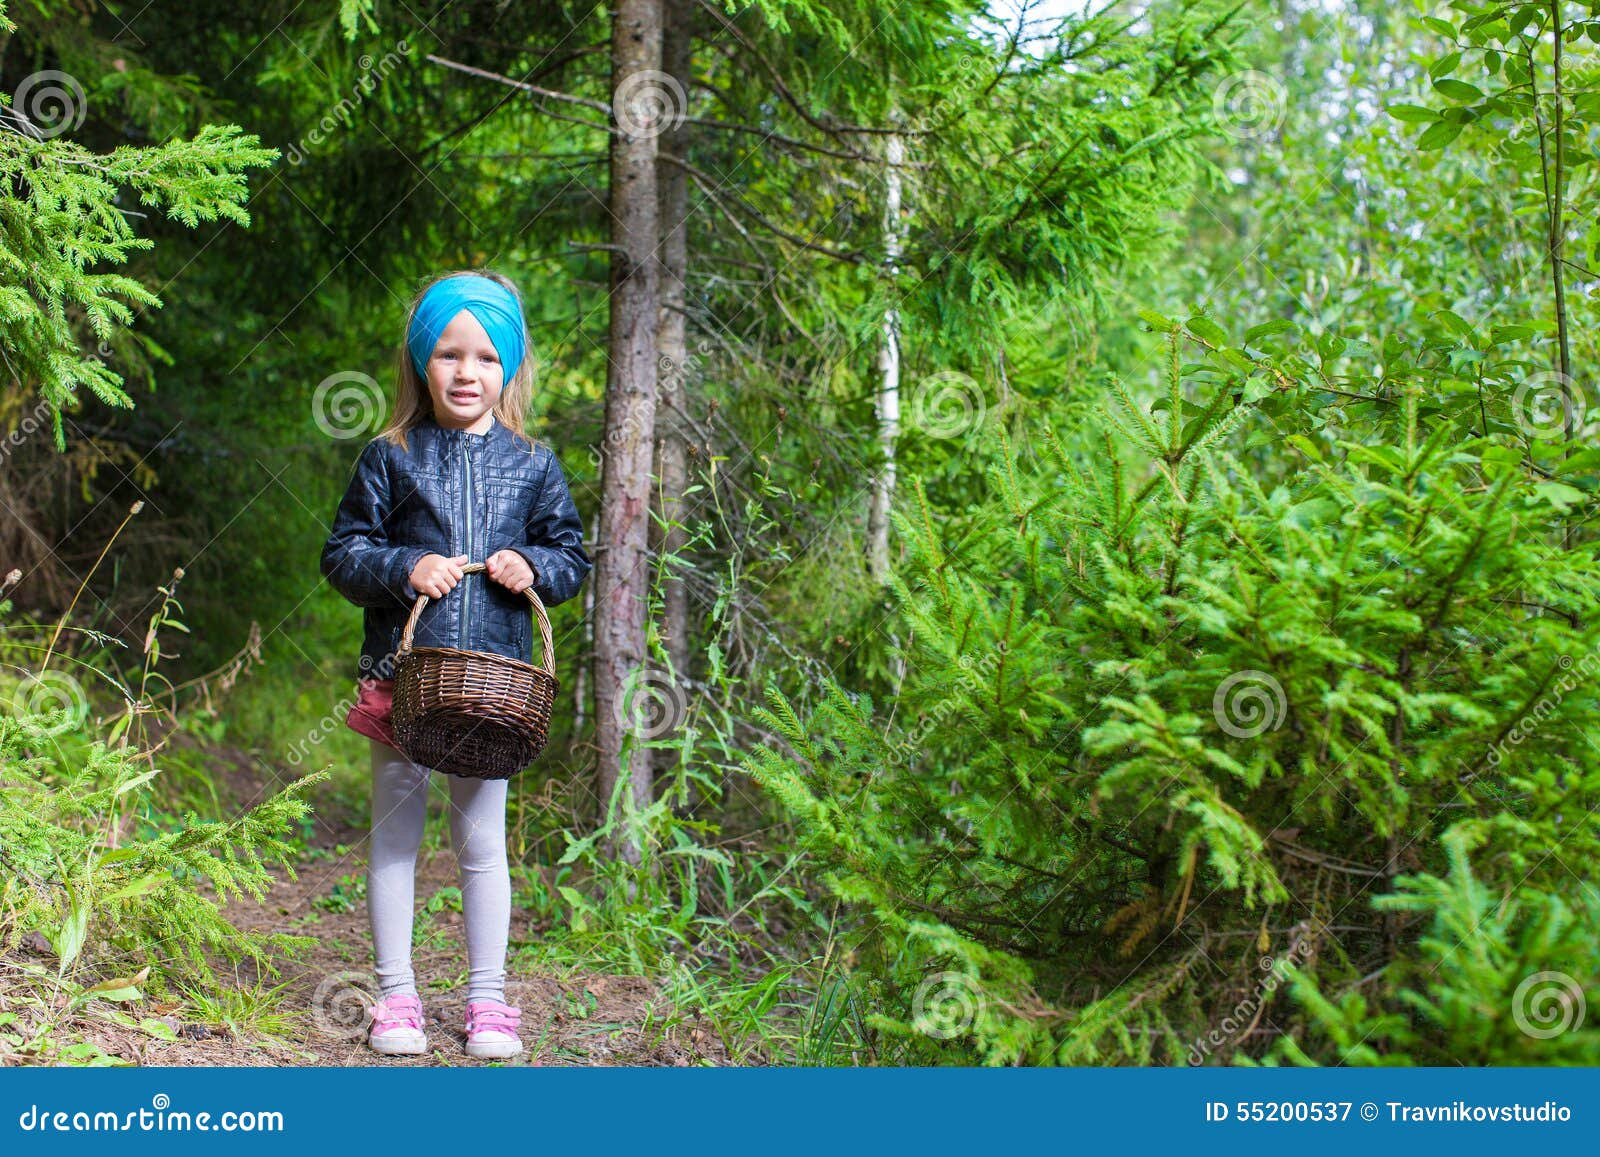 Девочка в лесу собирала грибы. Девочка в лесу за грибами. Девочка идет в лес за грибами. Девушка собирает грибы в лесу. Поход за грибами.